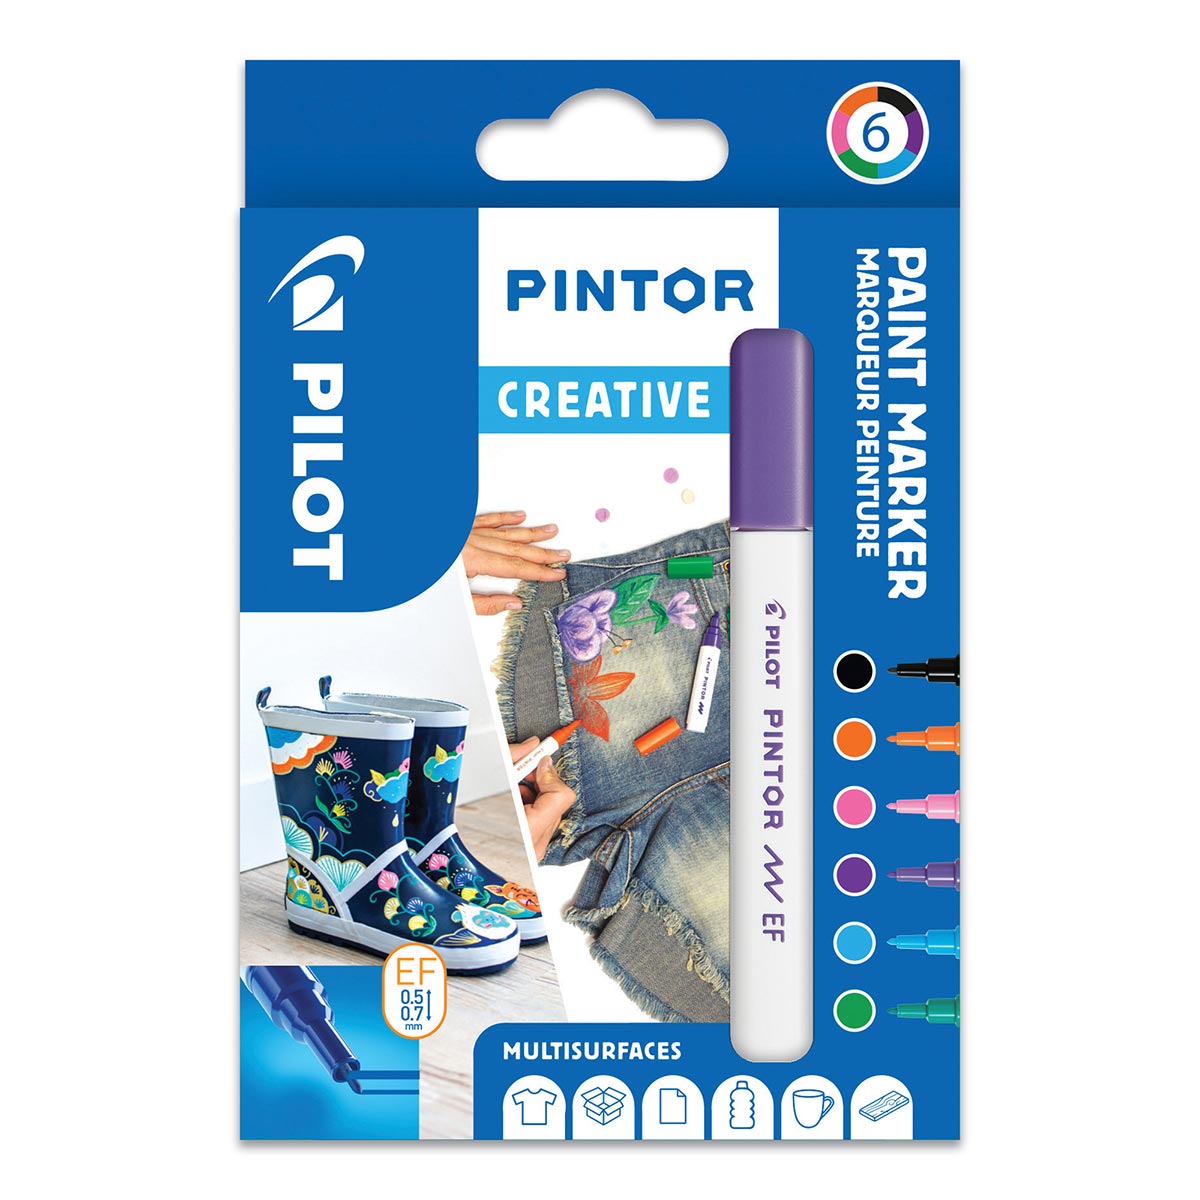 Pintor - verfmarker Extra Fine Tip 6 Pack - Creative